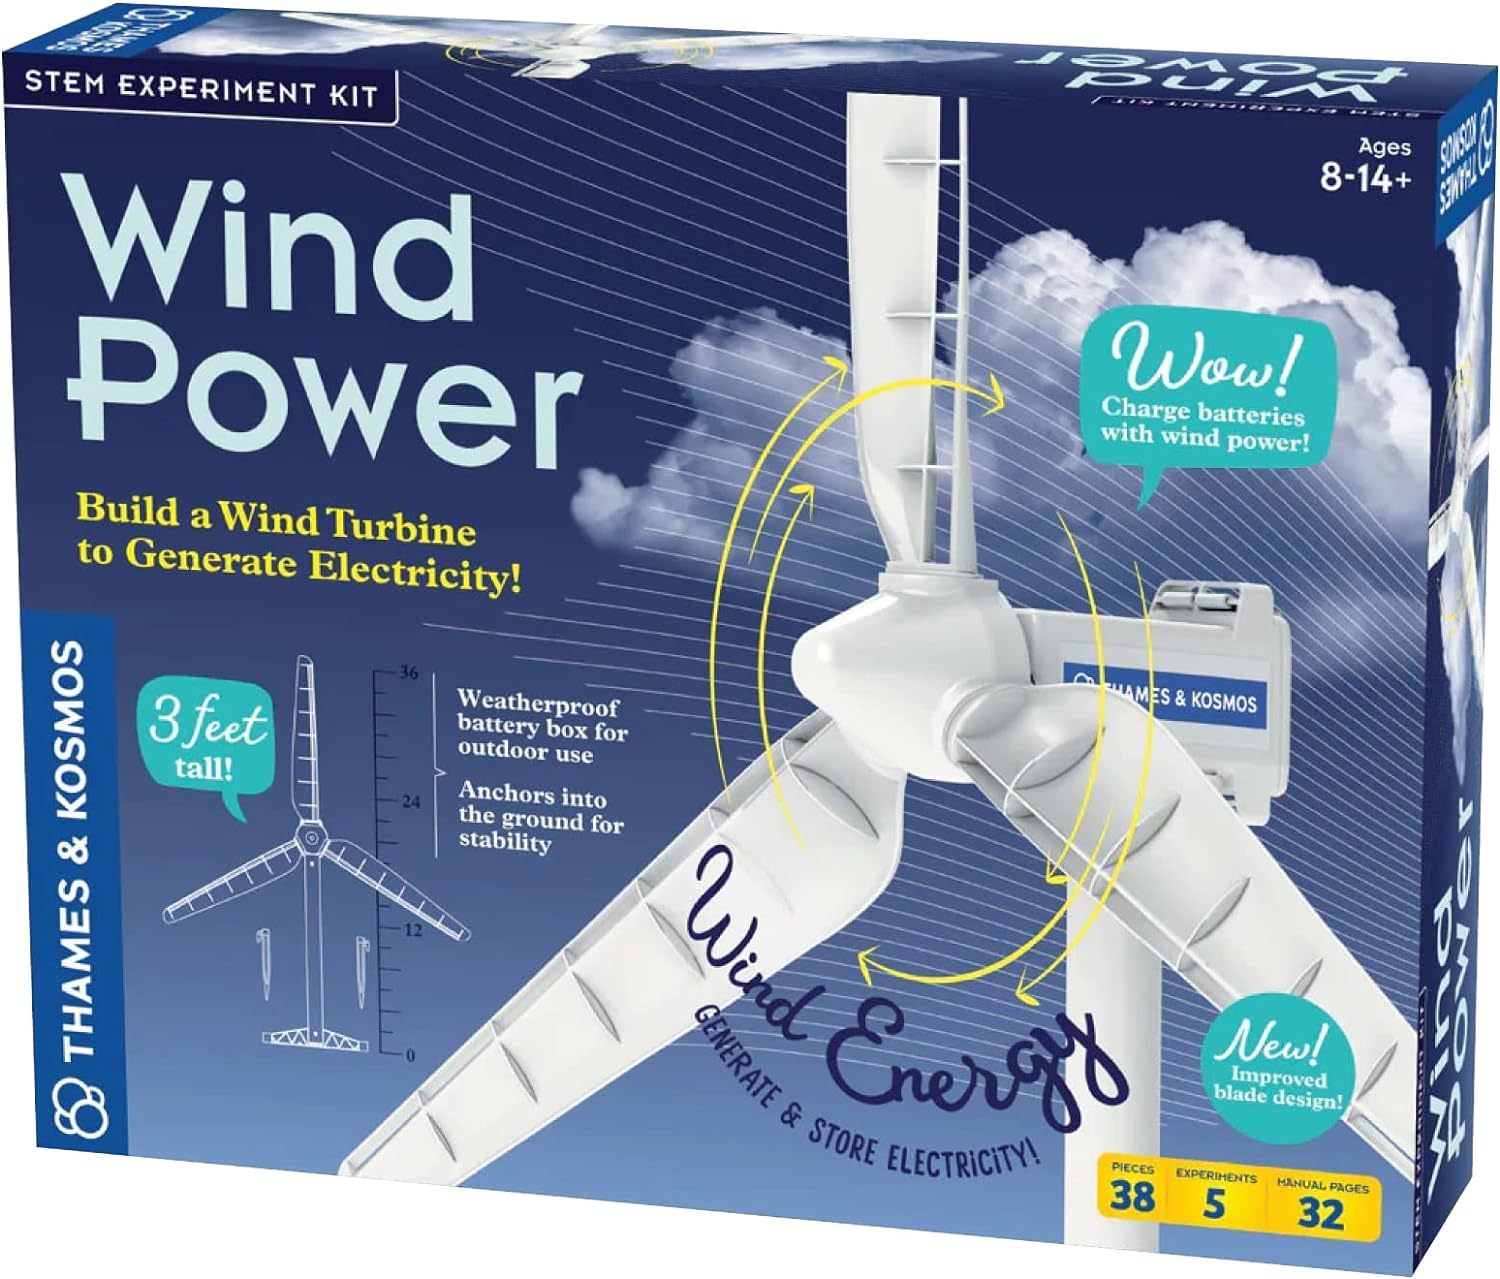 Wind Power STEM Experiment Kit